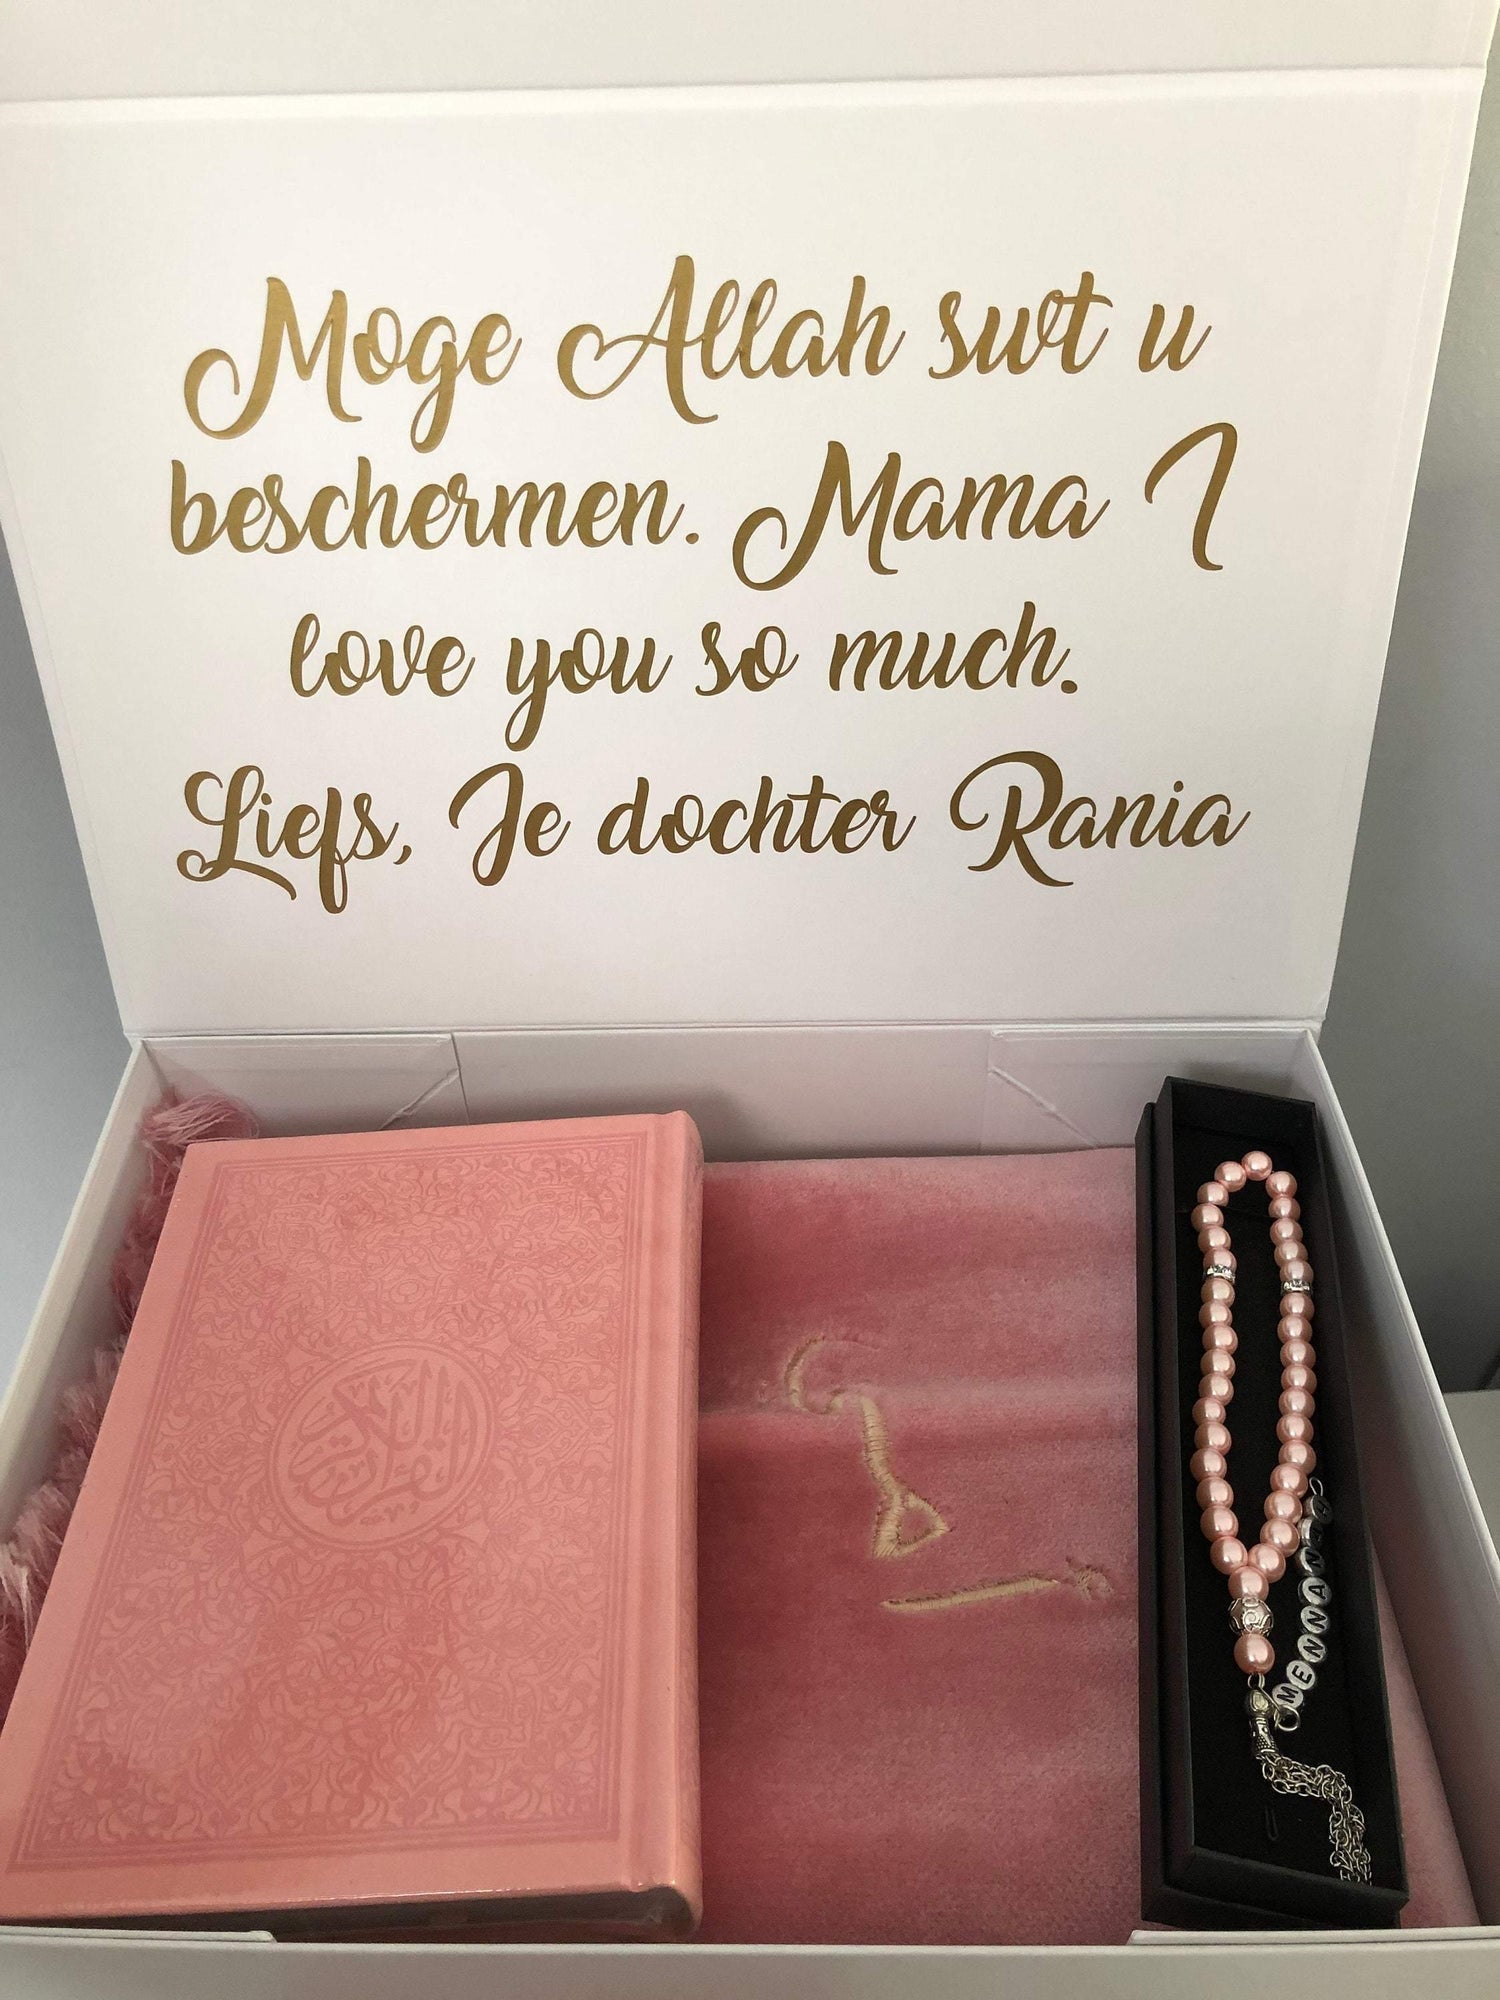 Personalised gift box Embossed Quran (Rug - Arabic Quran - Tasbih) - Unique Tasbihs & Gifts